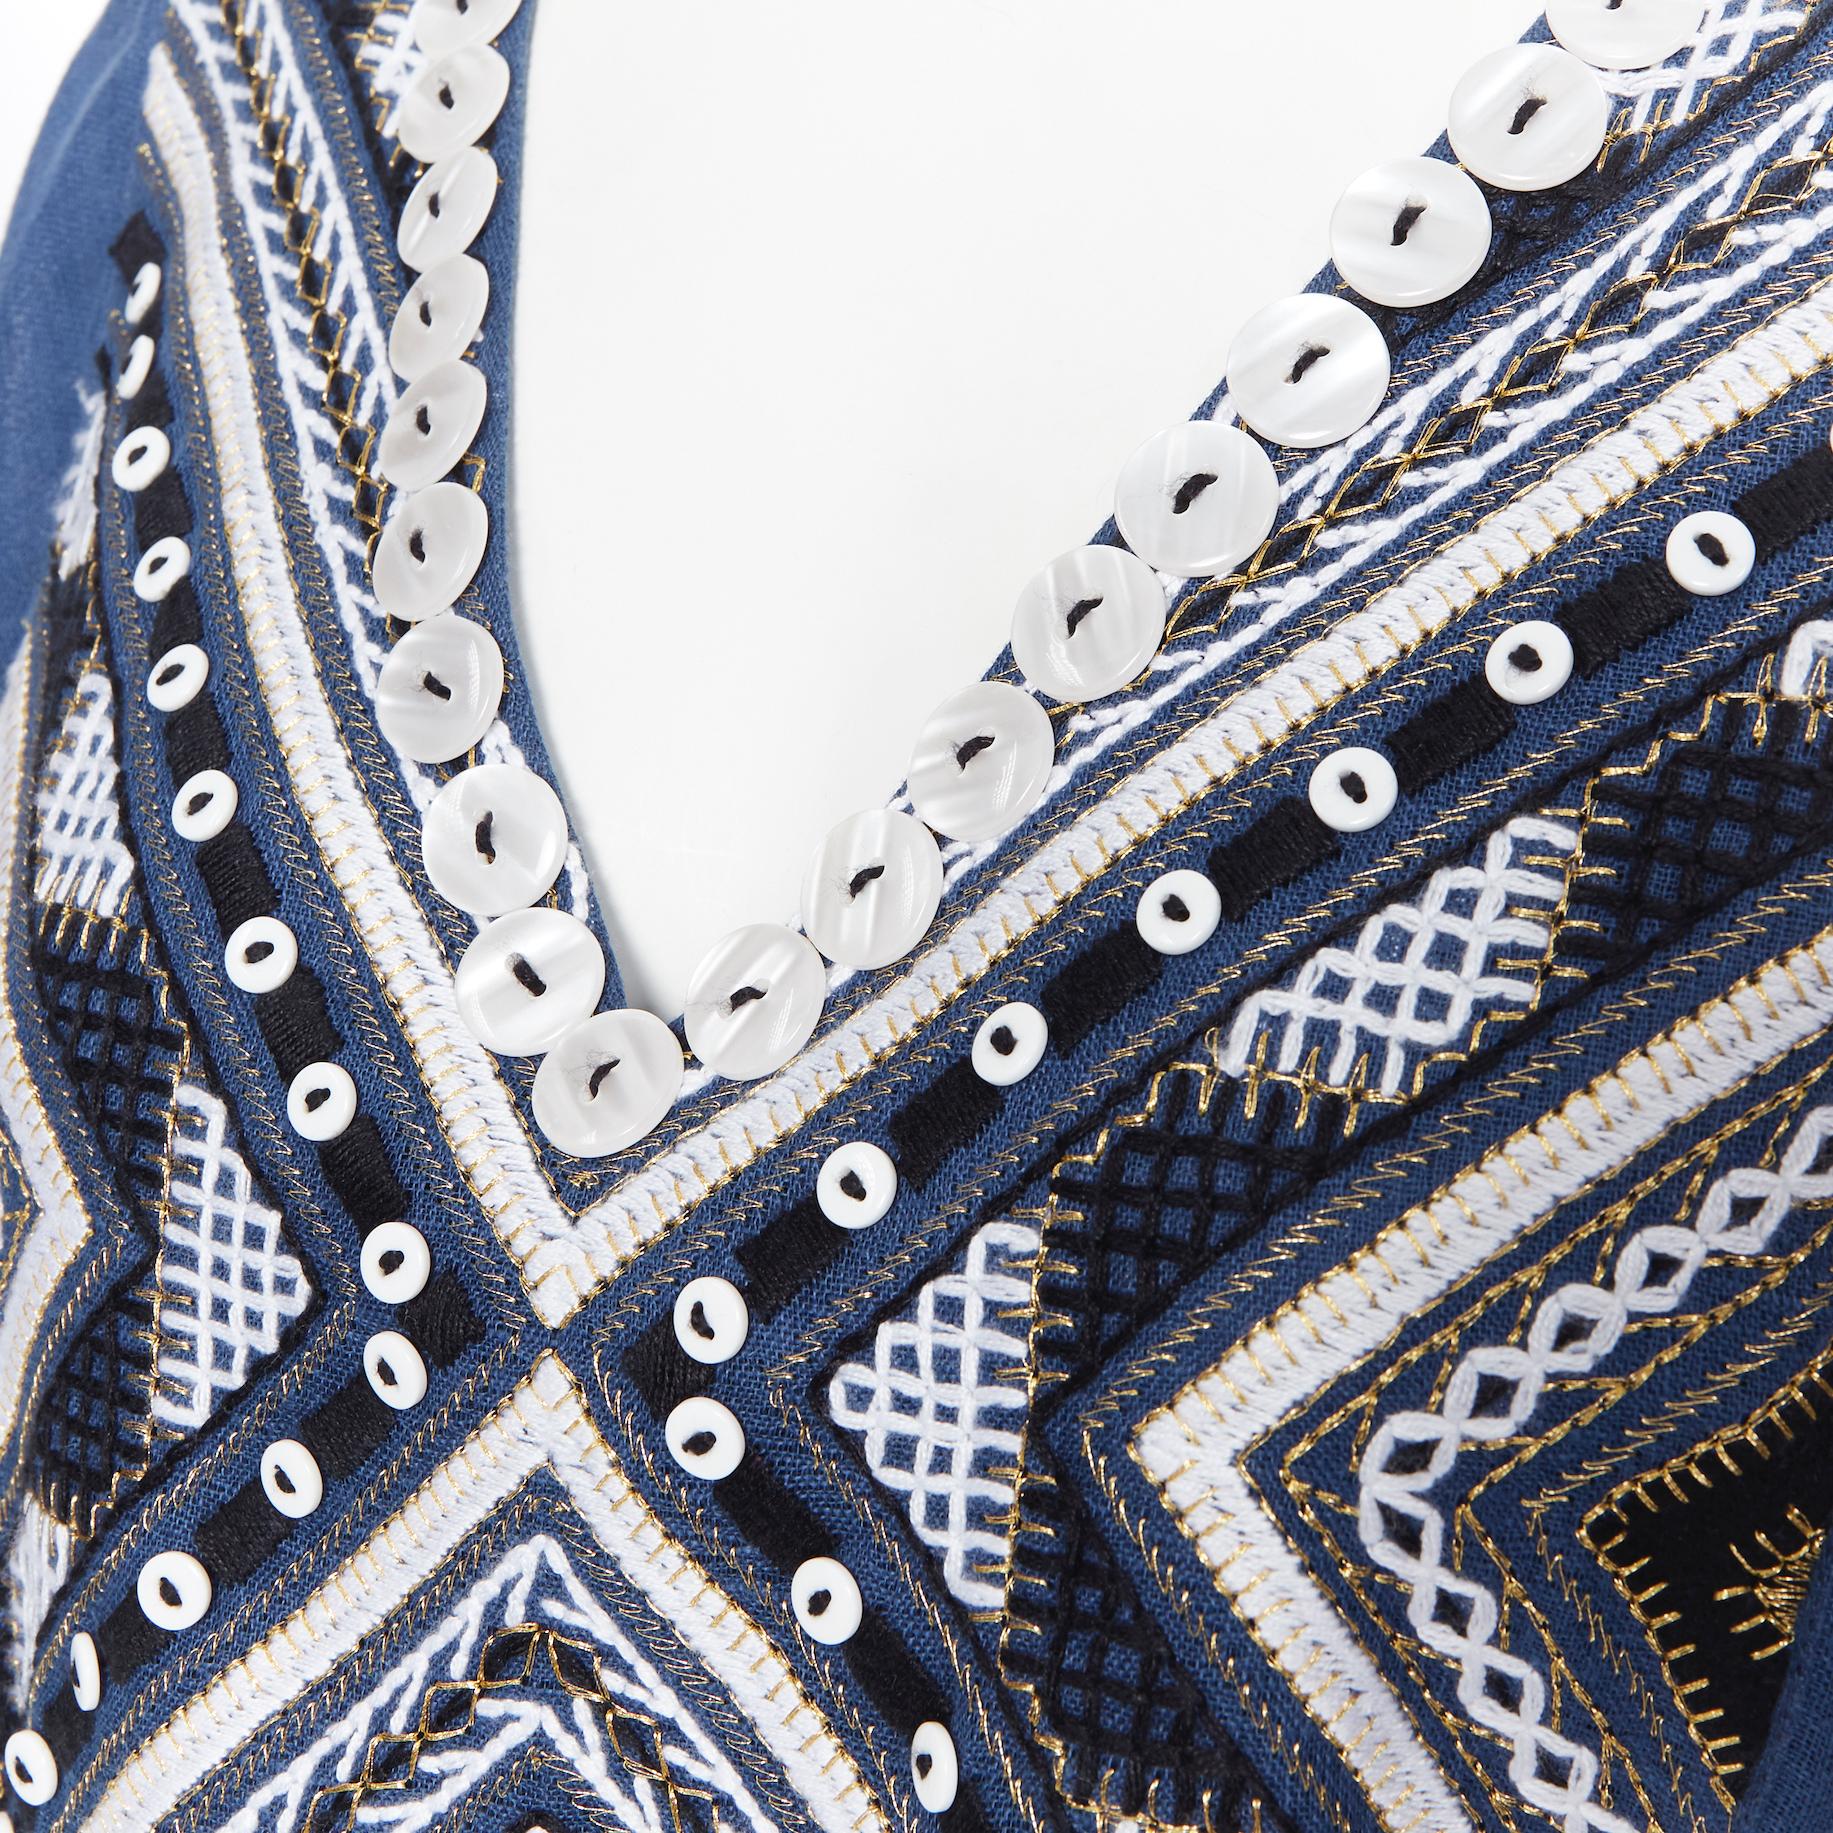 new VITA KIN blue Vyshyvanka button embellished wide sleeve boho day dress S
Brand: Vita Kin
Designer: Vita Kin
Collection: SS19
Model Name / Style: Bohemian dress
Material: Linen
Color: Blue
Pattern: Geometric
Extra Detail: Plunge V-neckline.